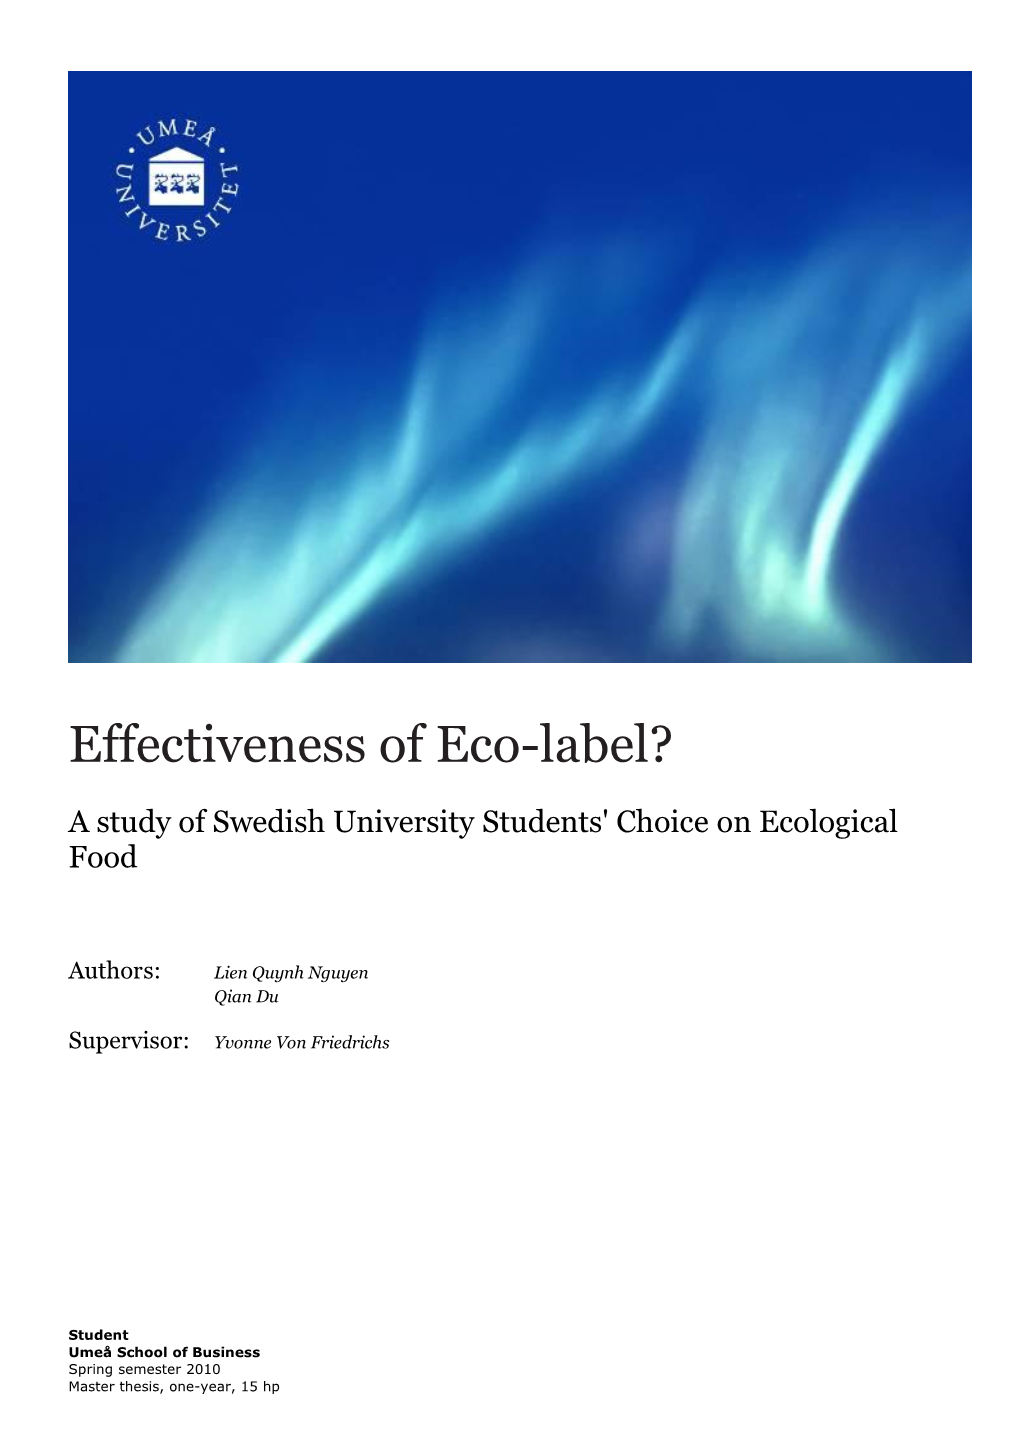 Effectiveness of Eco-Label?